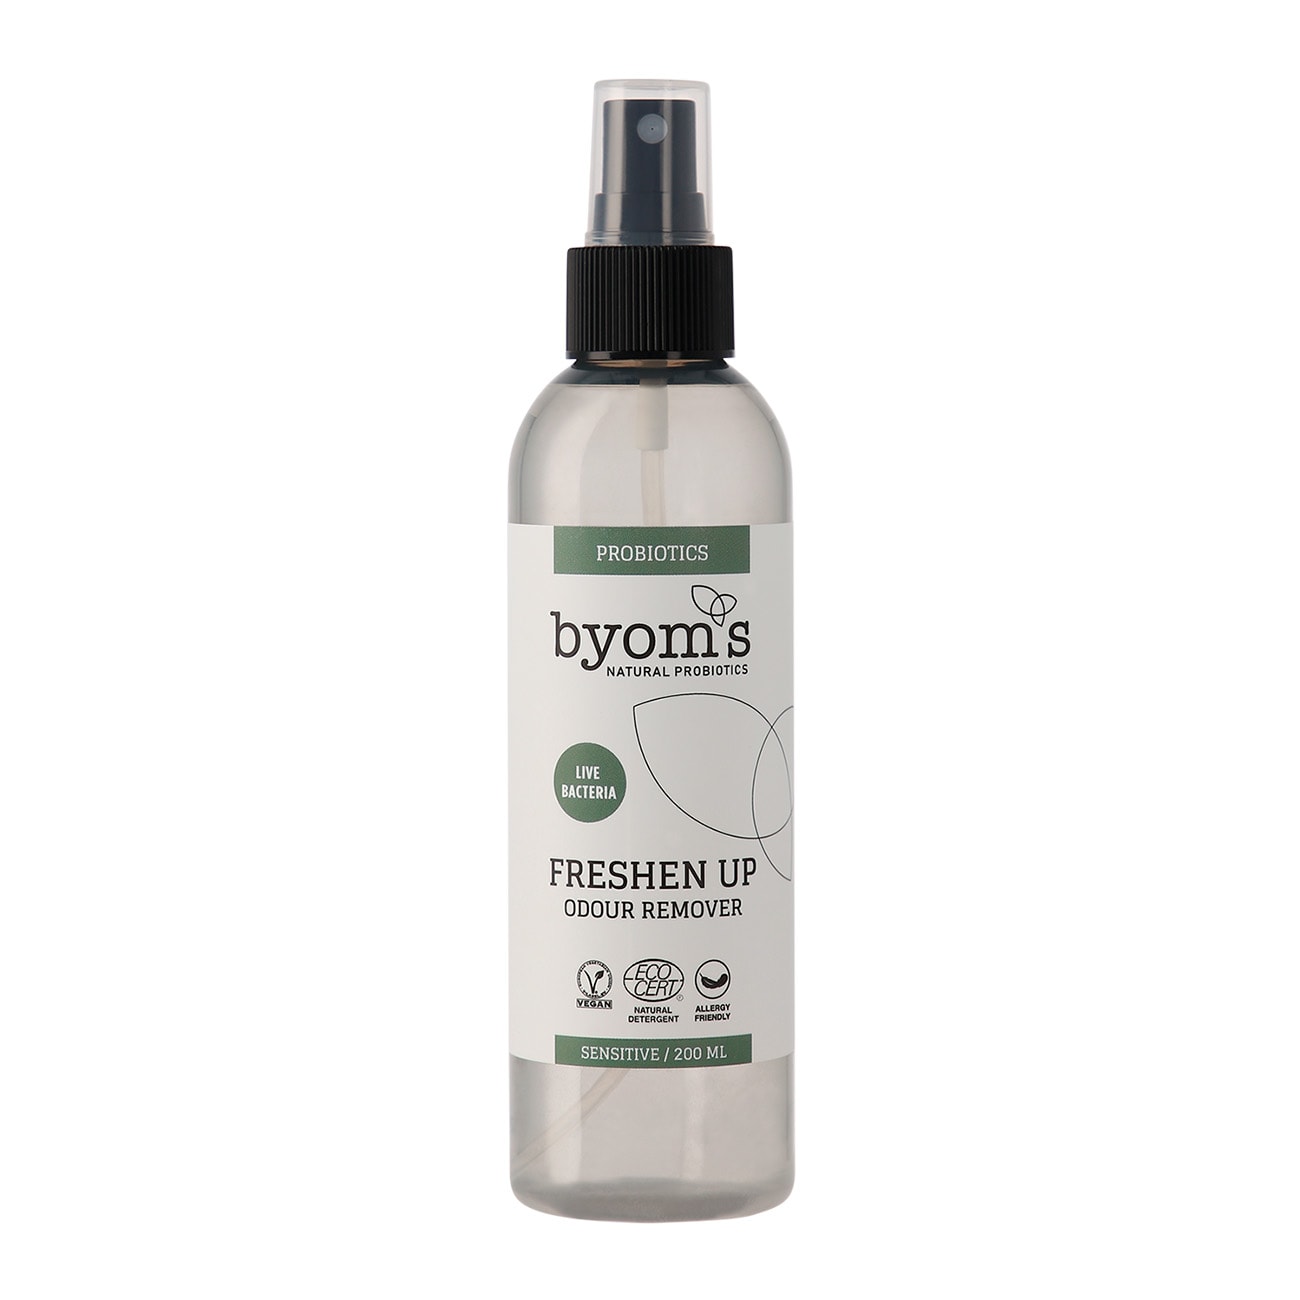 Byoms Freshen Up Spray - Odour Remover - Sensitive